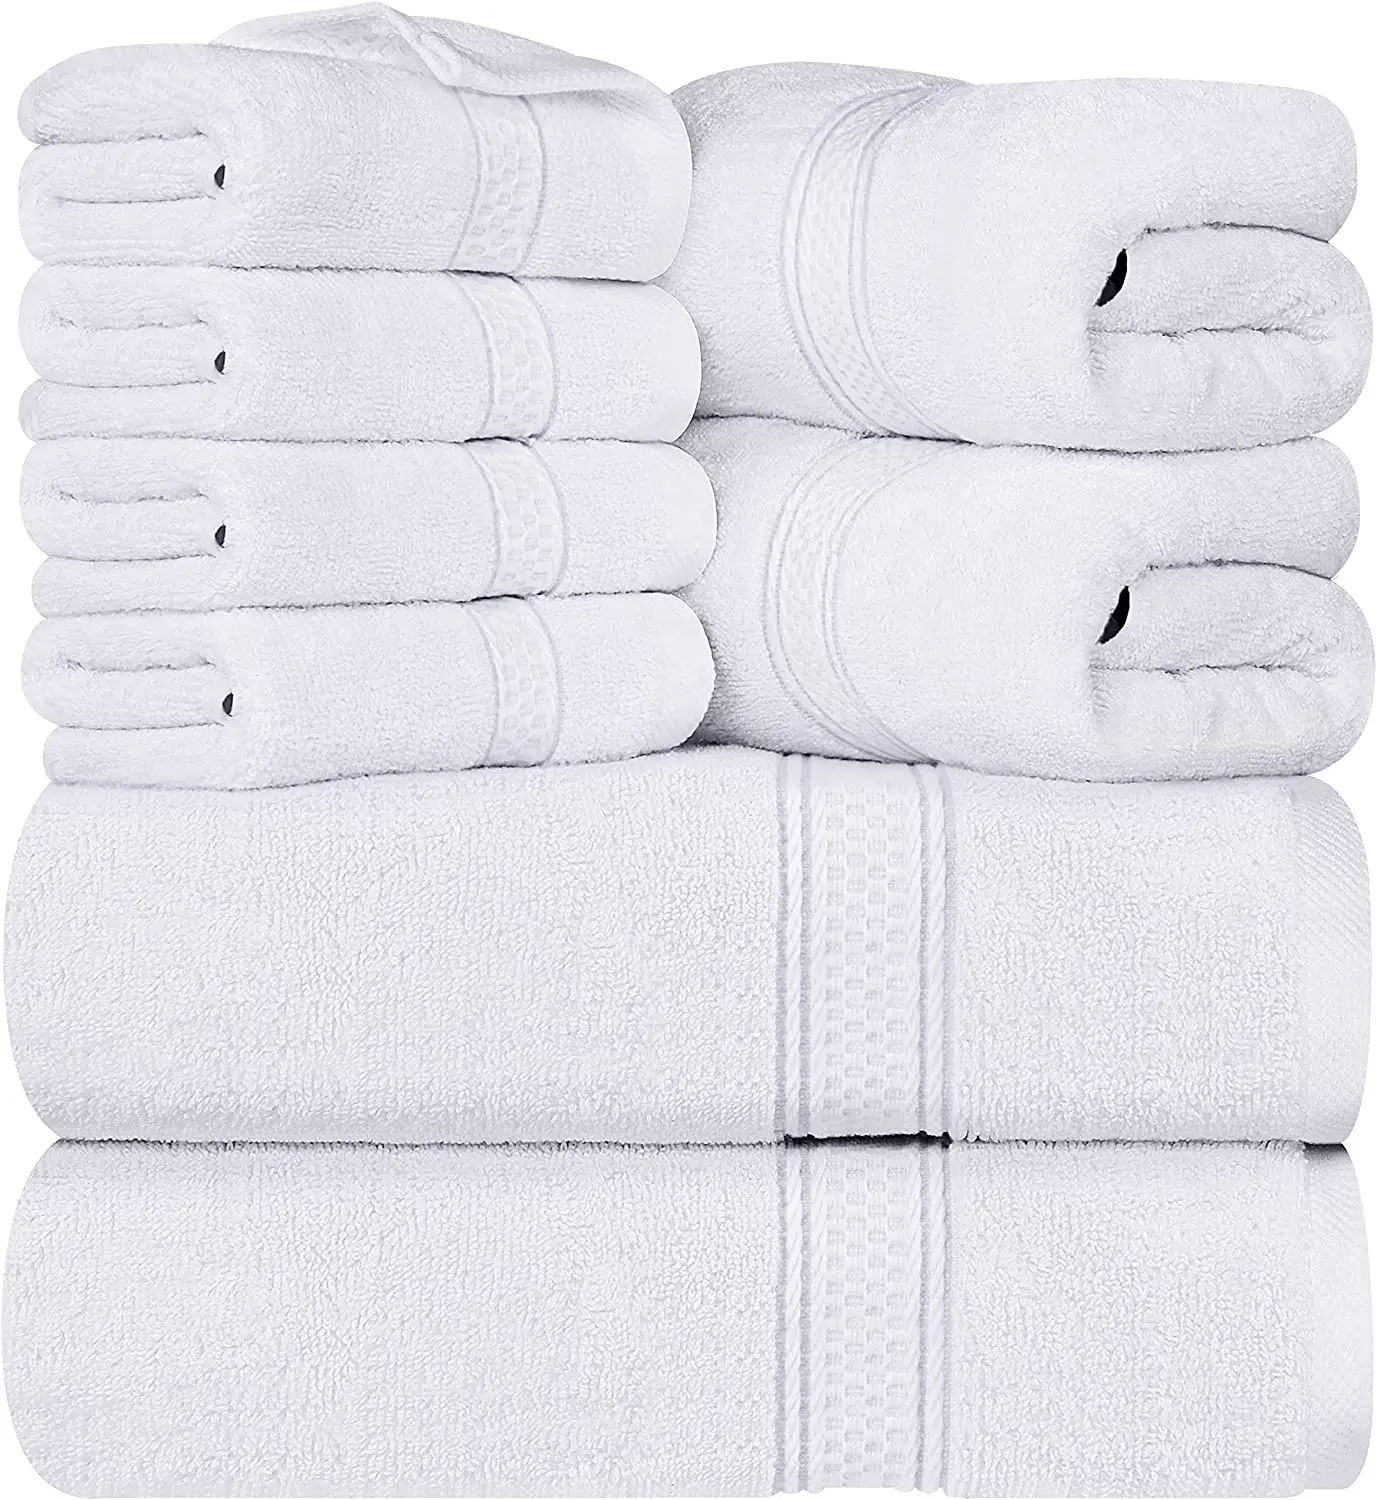 Wholesale Luxury 100% Cotton 8pcs Towel Set Bathroom Towel Hand Bath Towel